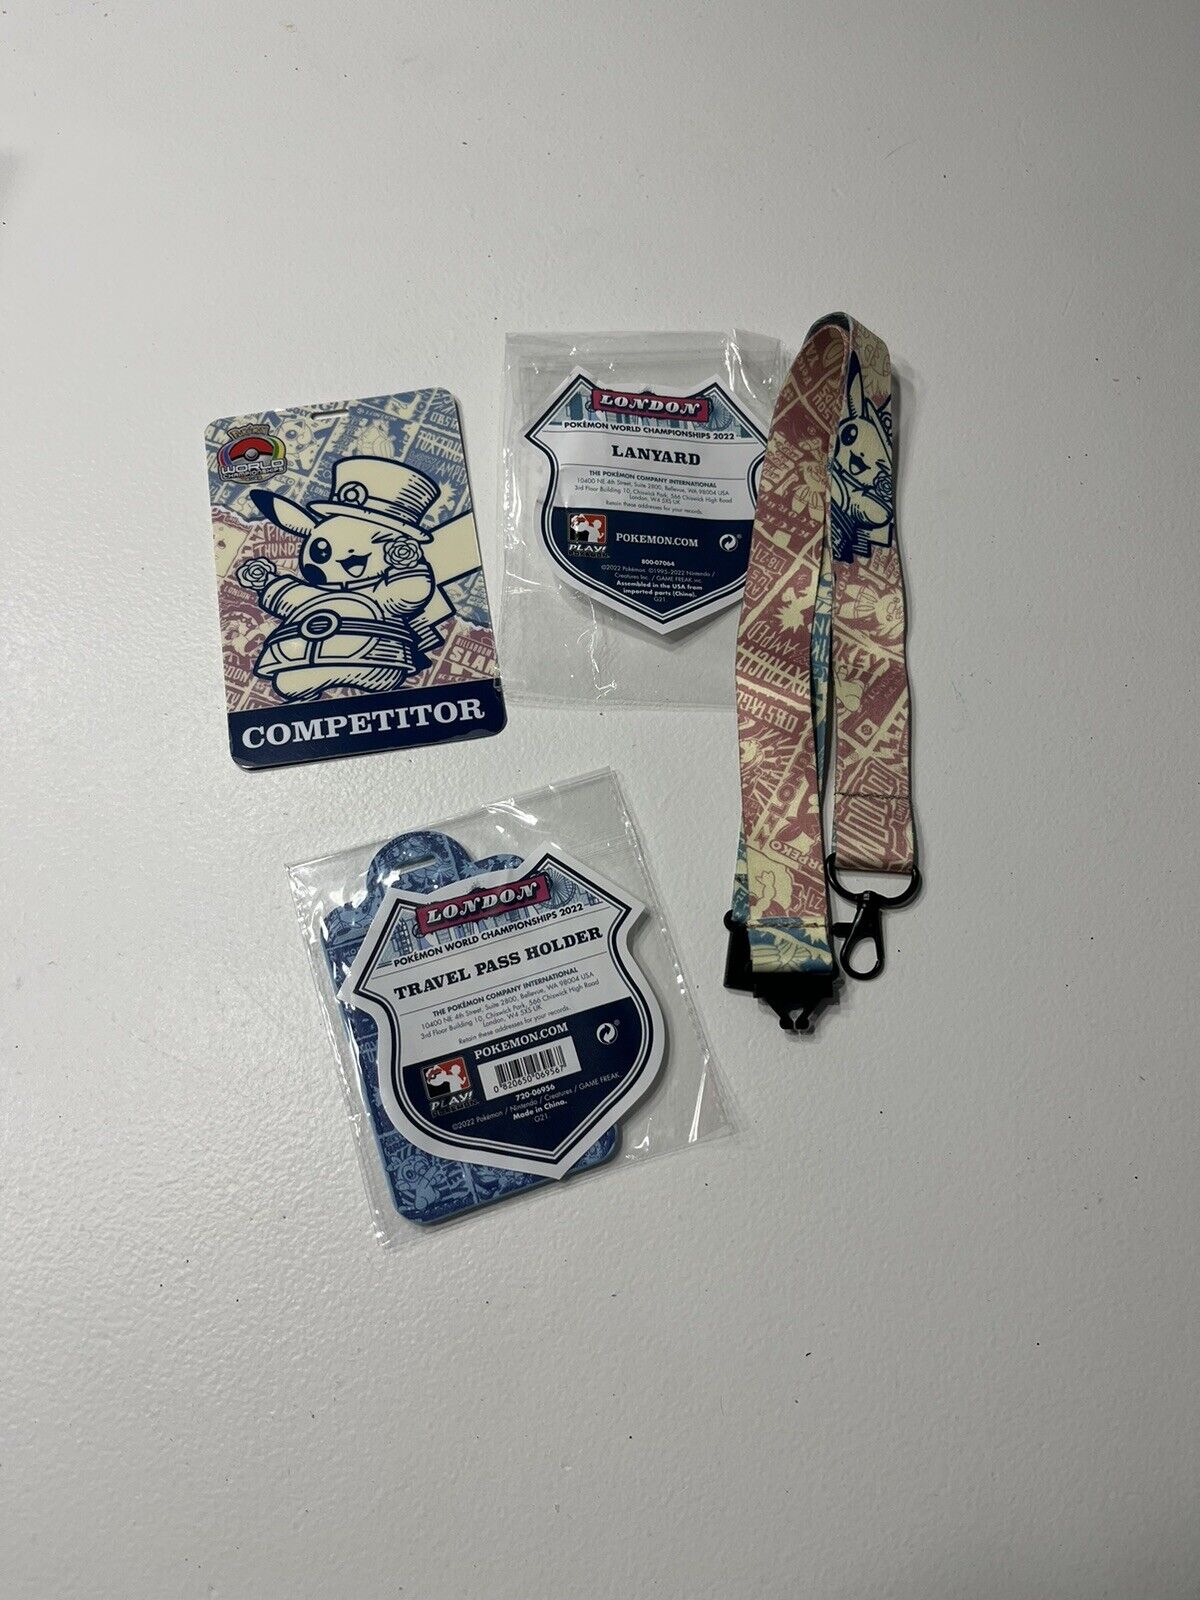 Pokemon‘22 London World Championship Competitor Badge/Lanyard+Travel Pass Holder